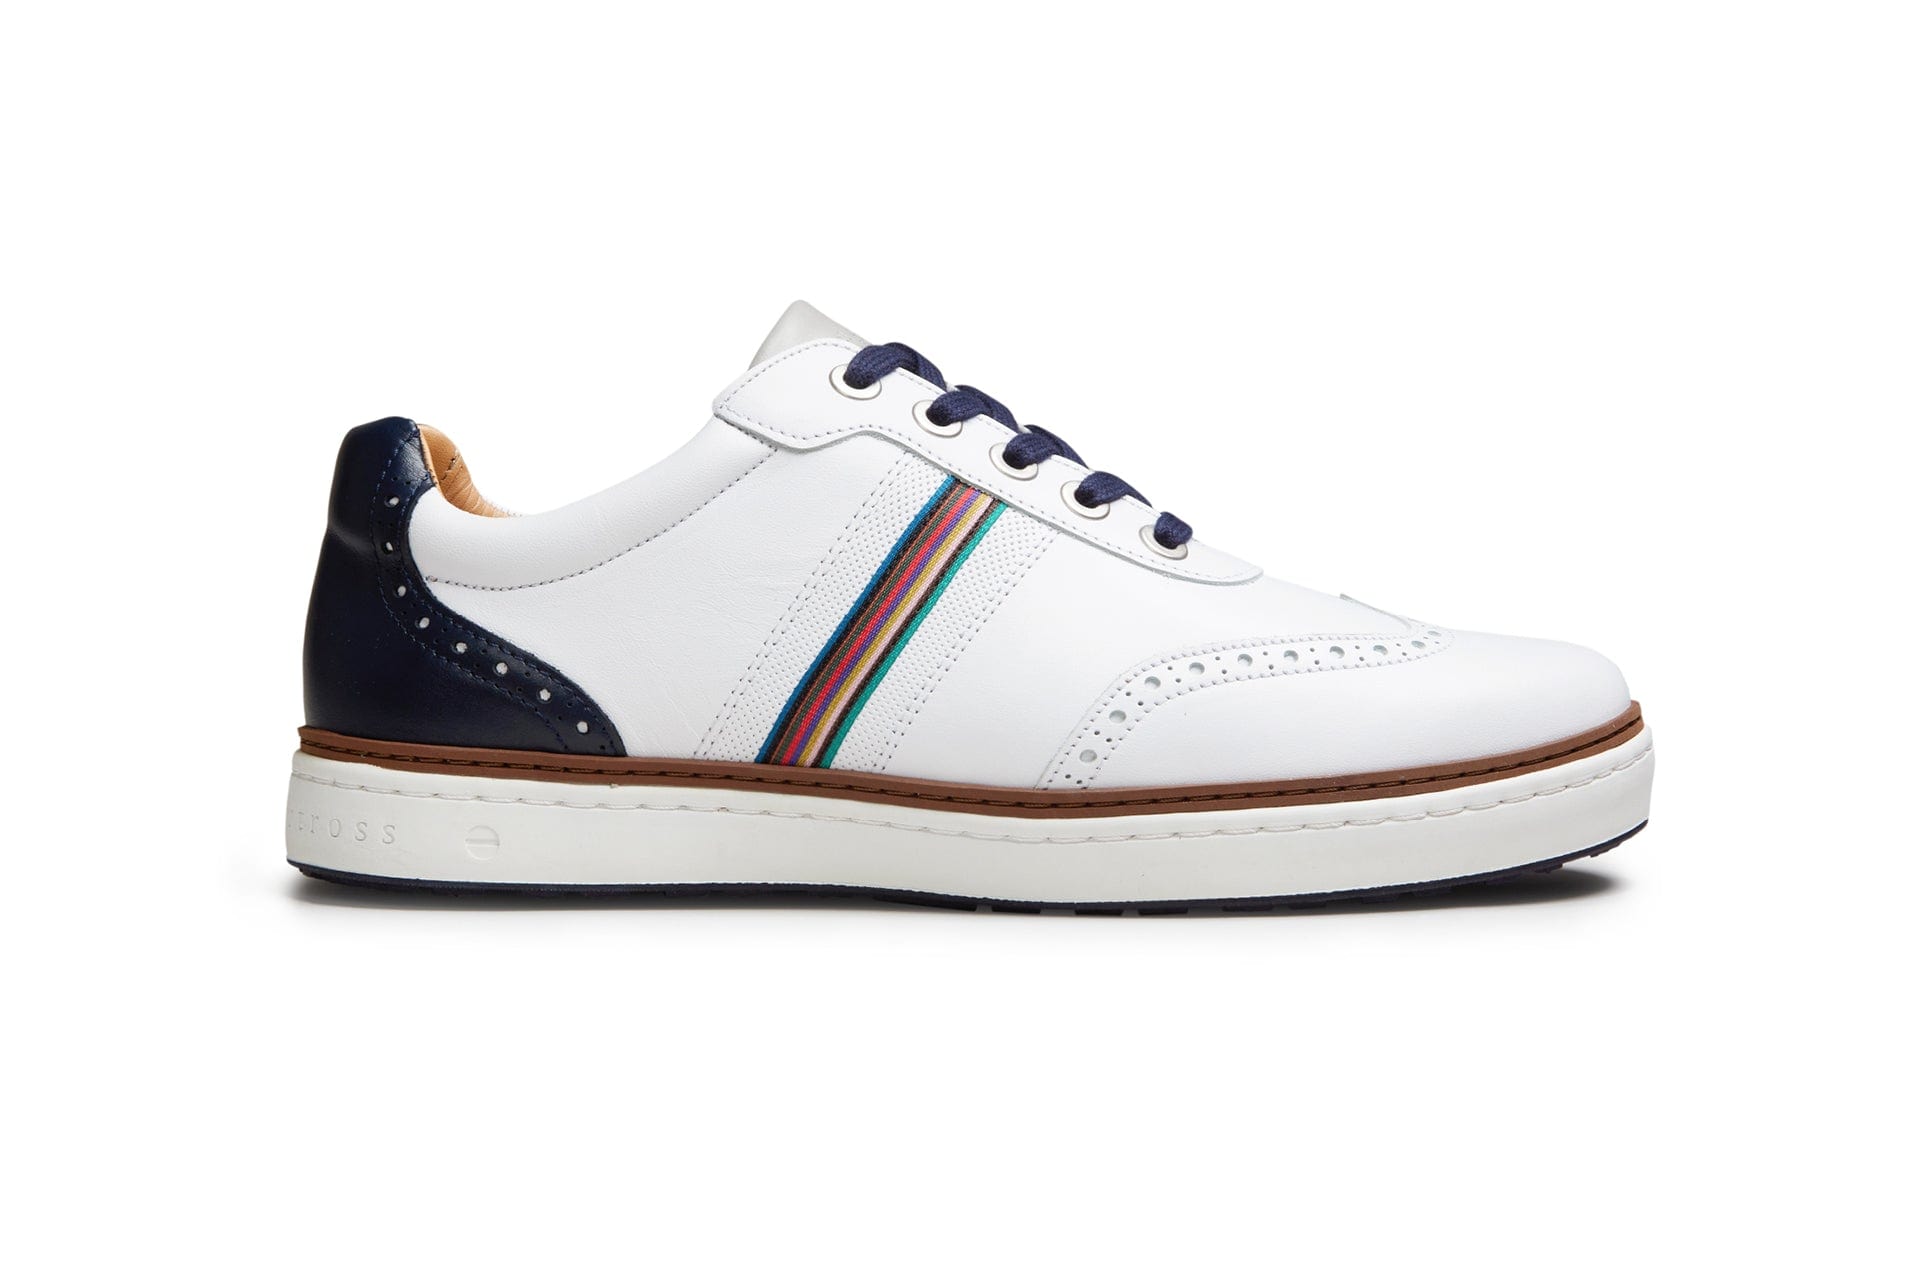 Men's Golf Shoes | Performance, Luxury & Style | Royal Albartross